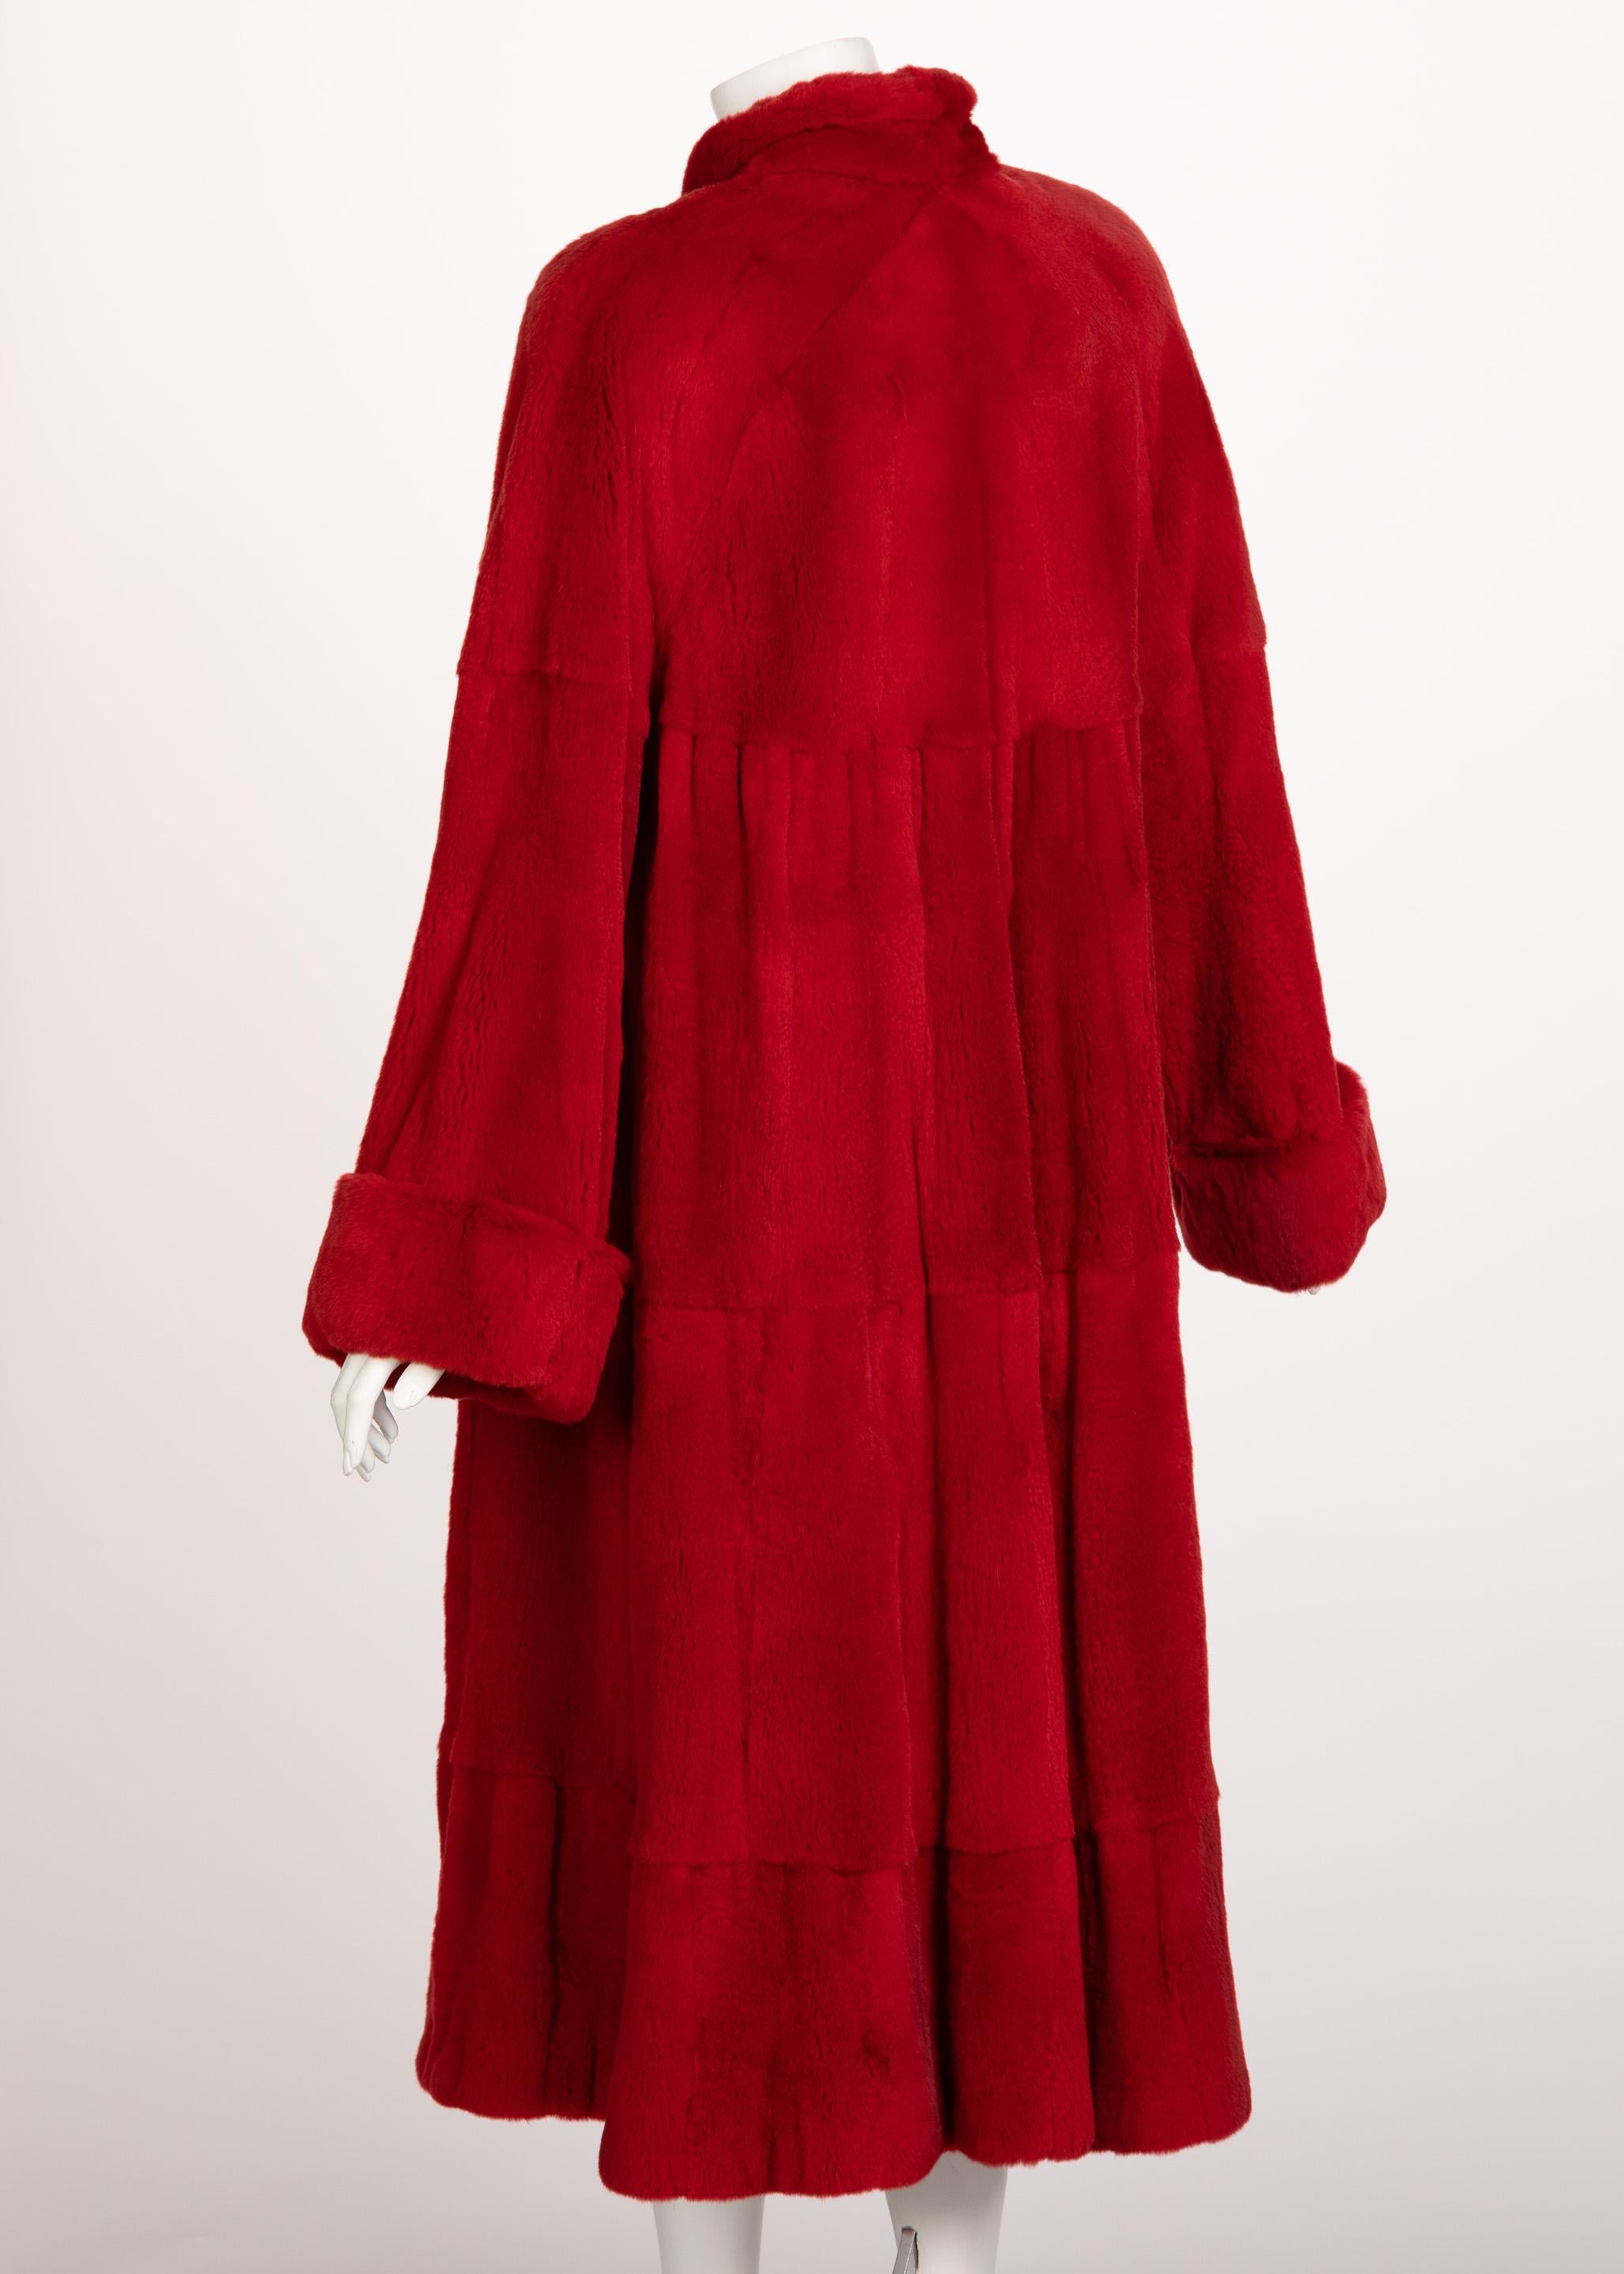 manteau femme vison vintage